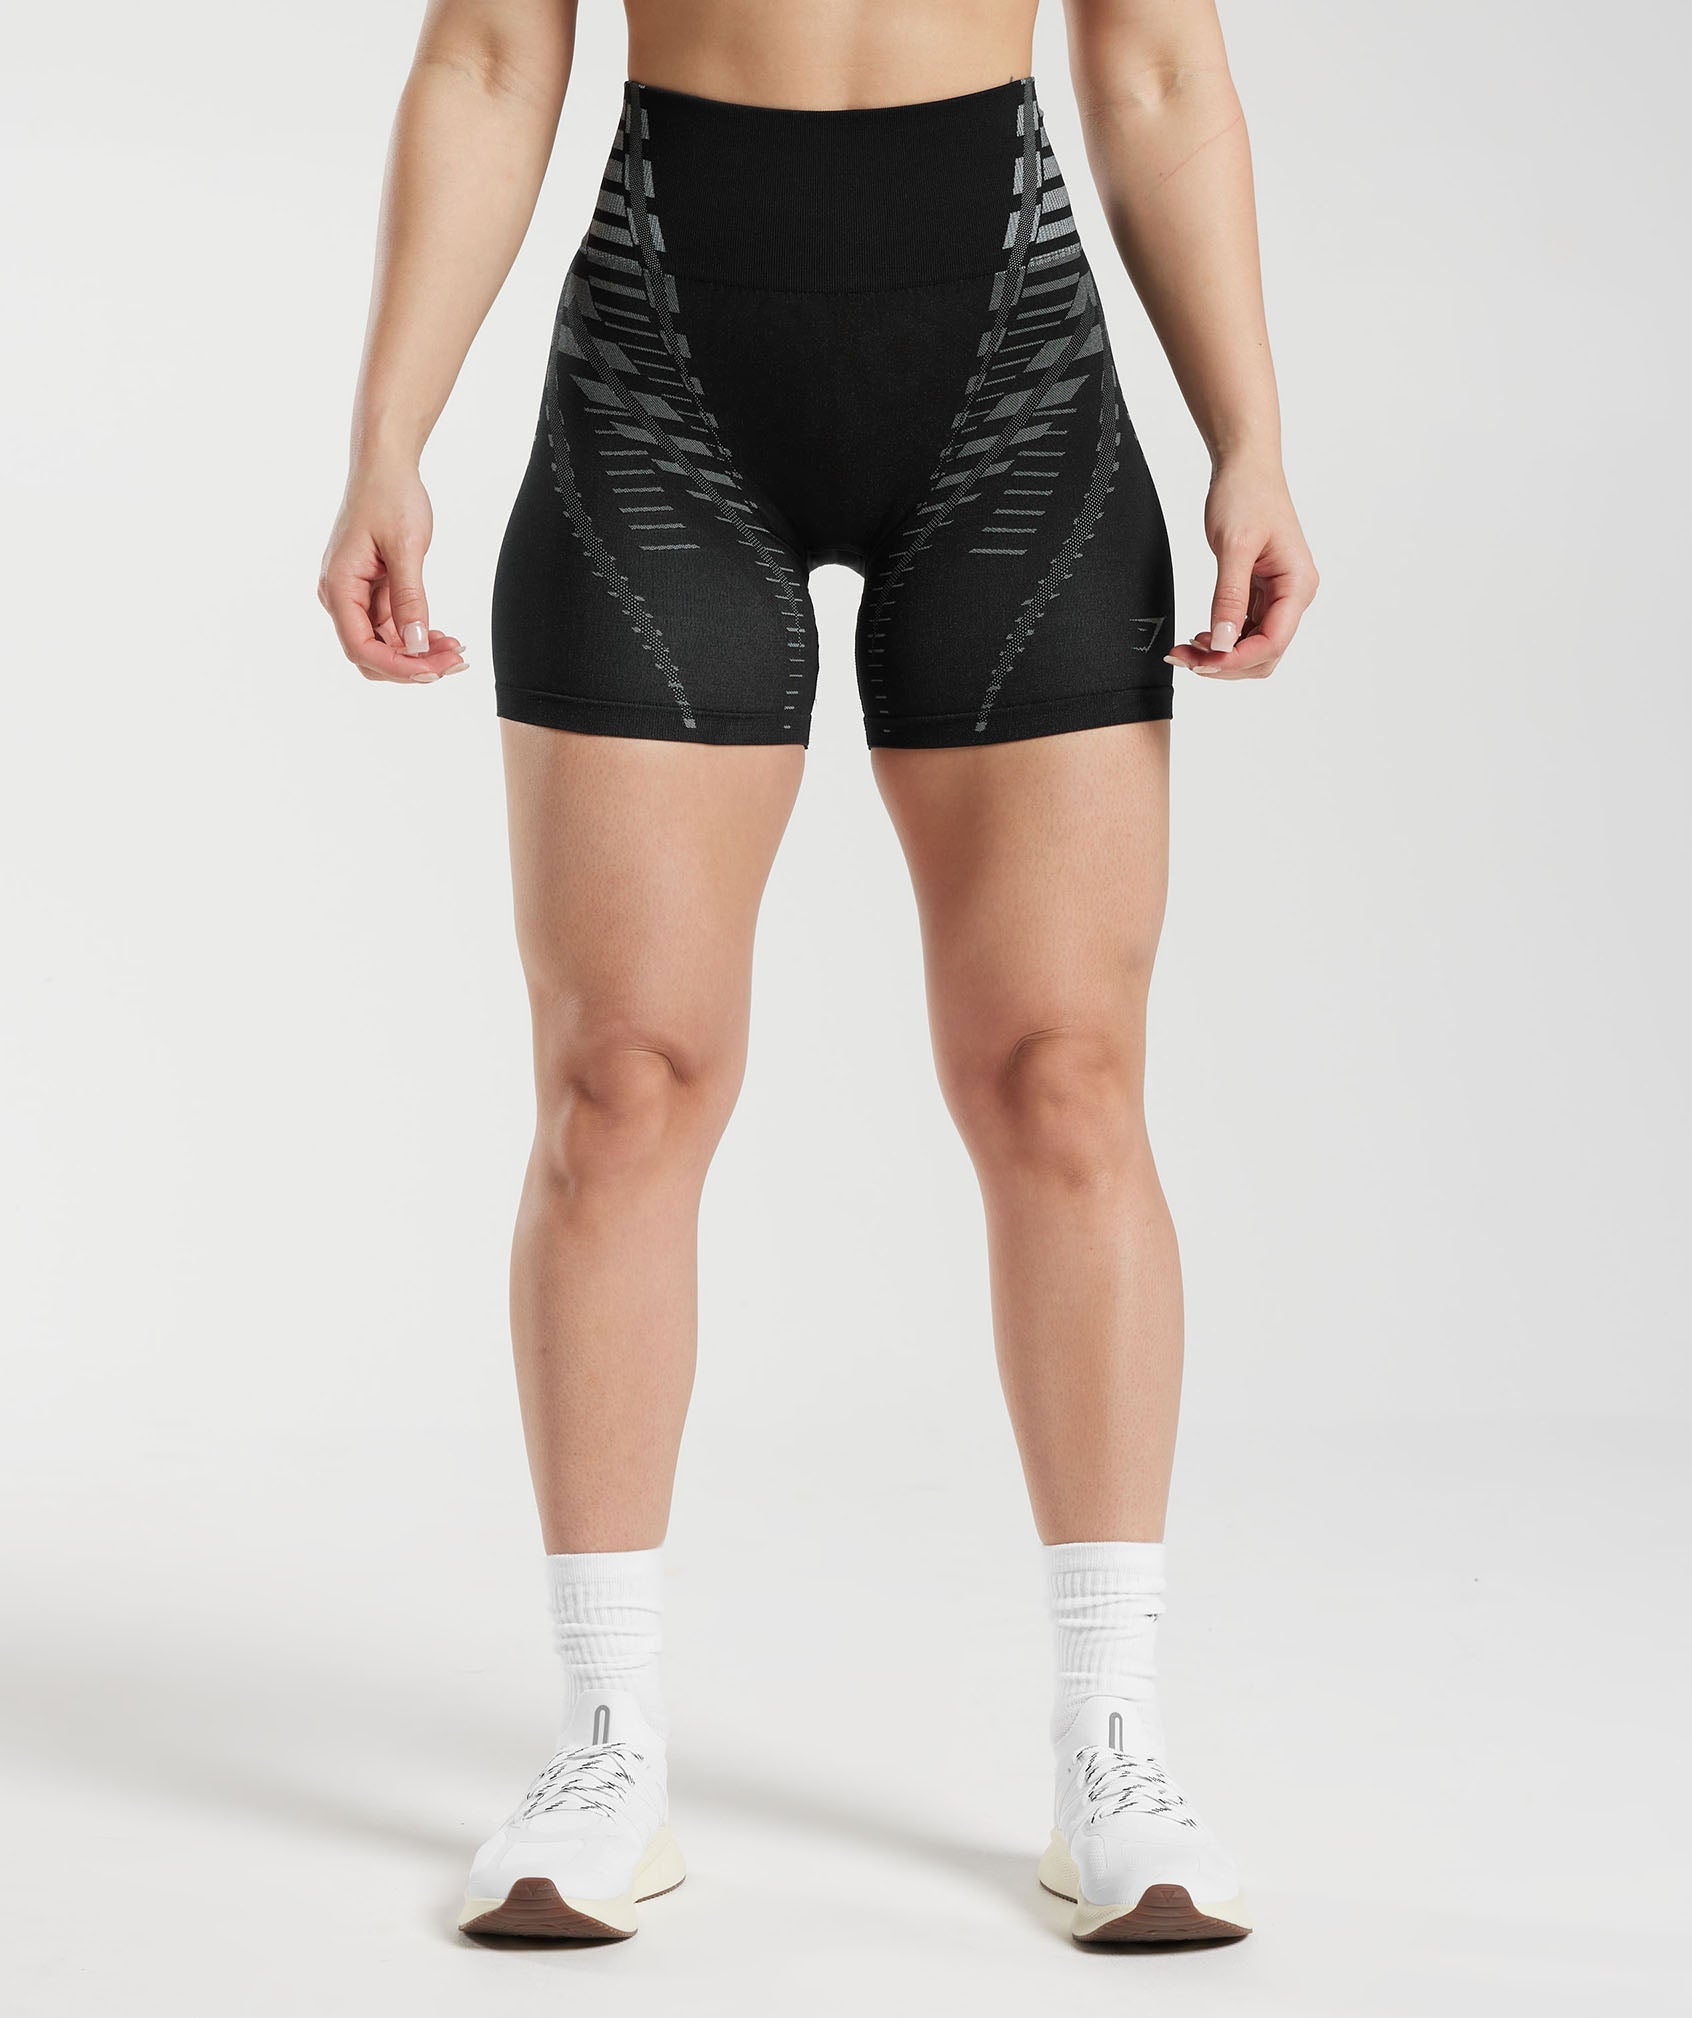 No limits🖤 Wearing @gymshark new limitless shorts